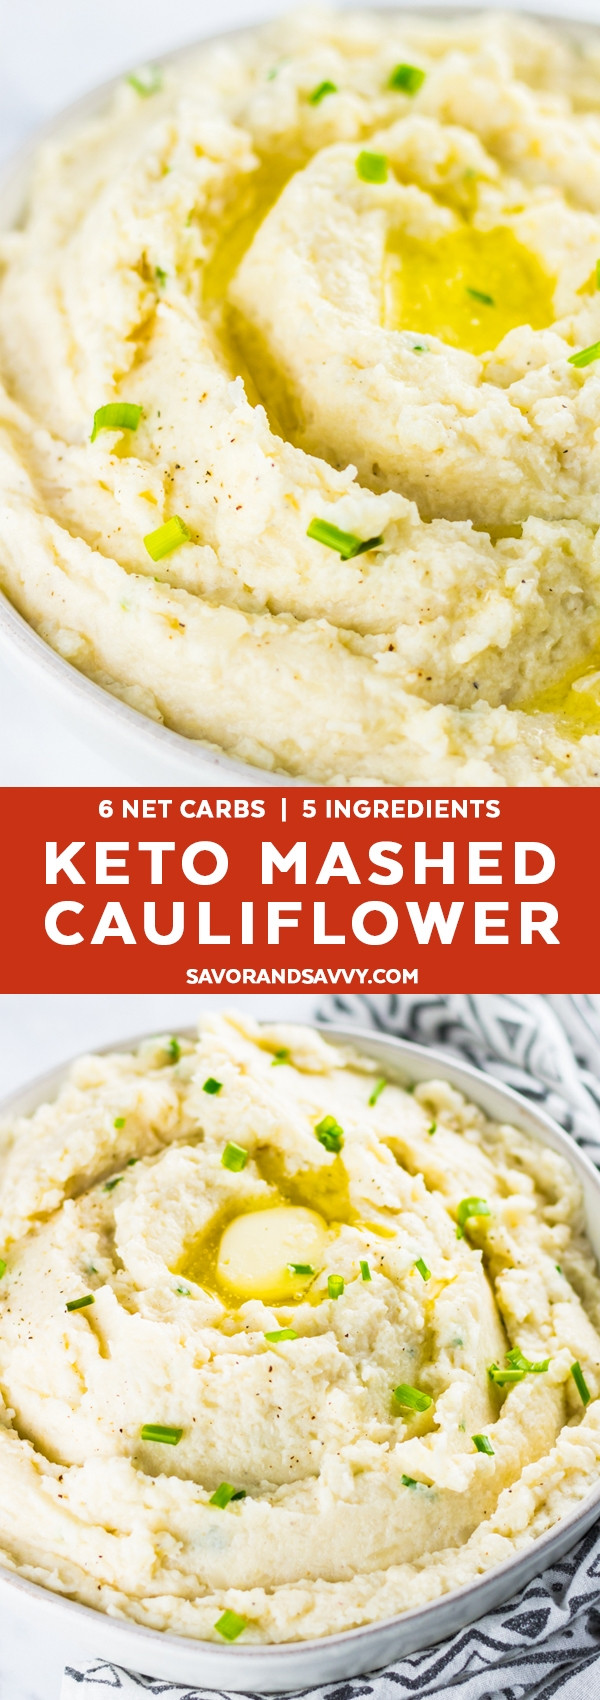 Cauliflower Recipes Keto
 Keto Mashed Cauliflower Recipe